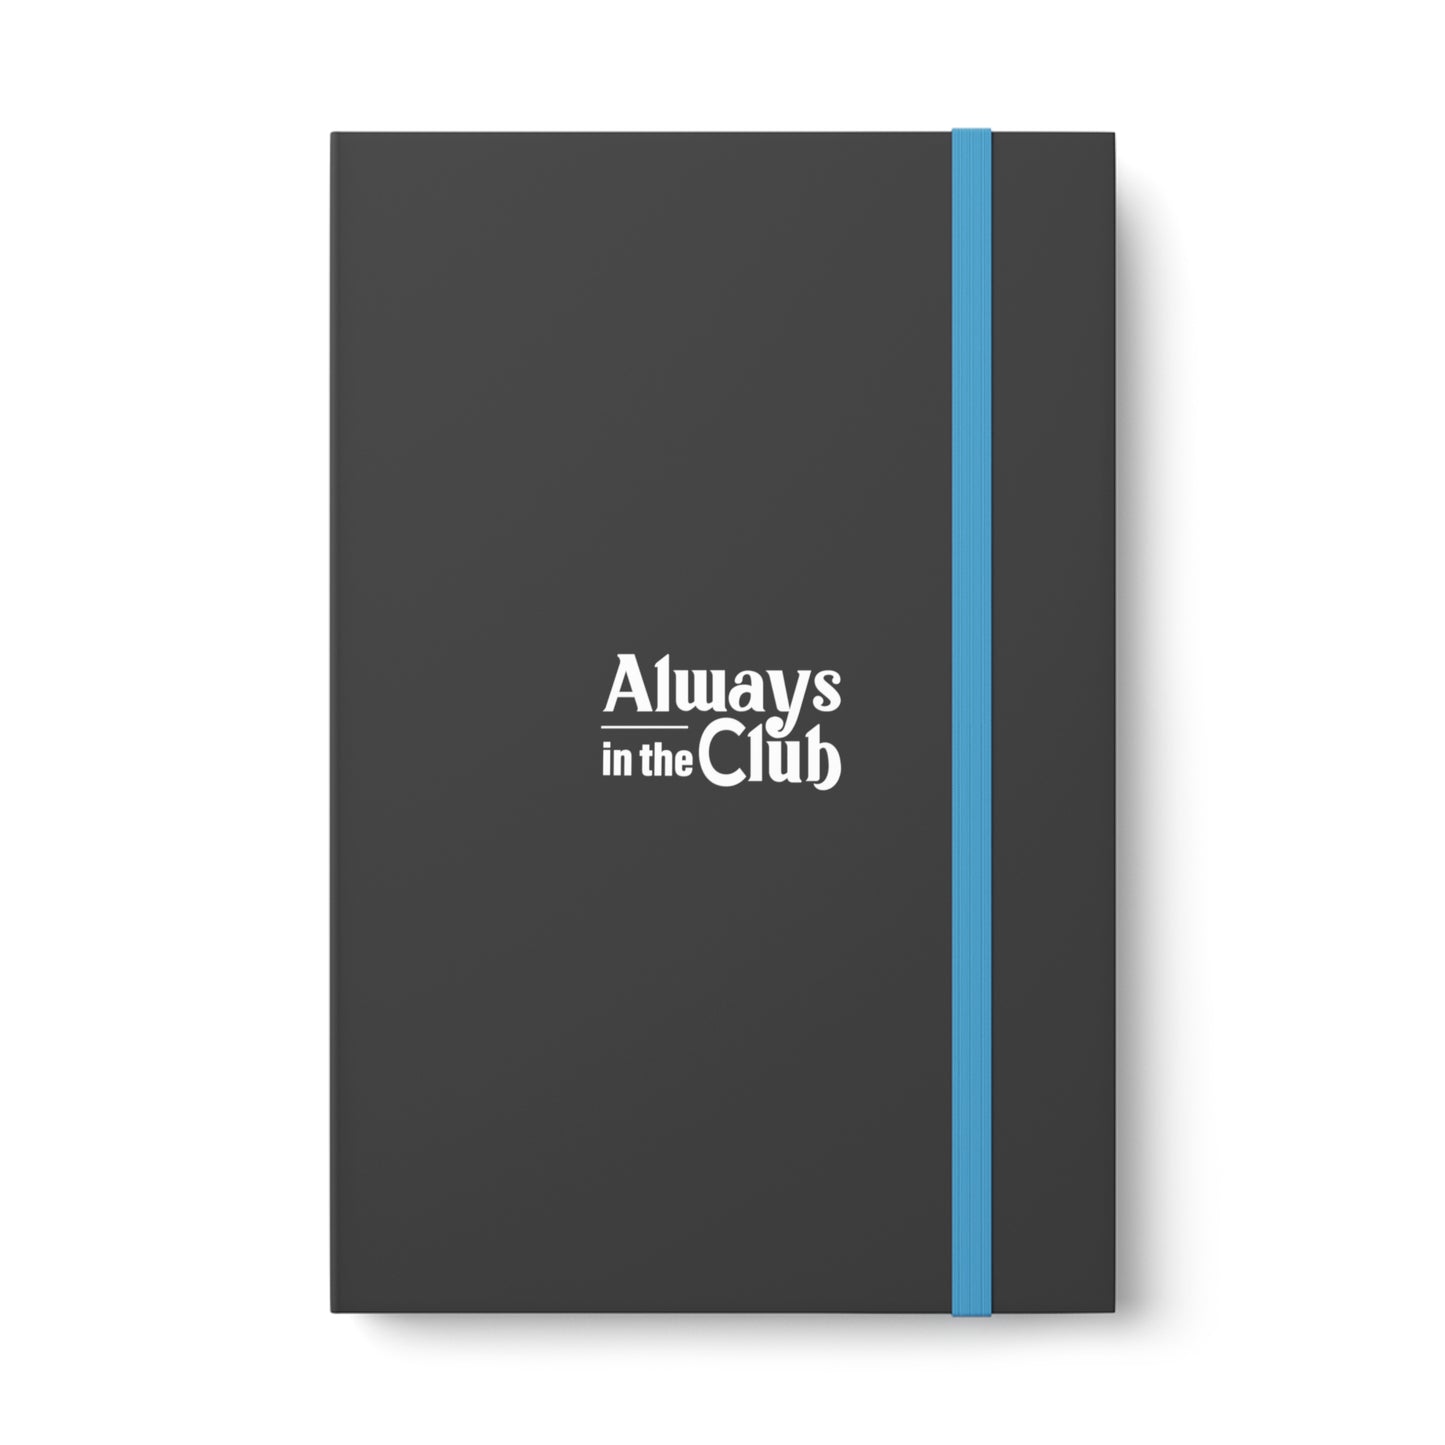 AITC Color Contrast Notebook - Ruled